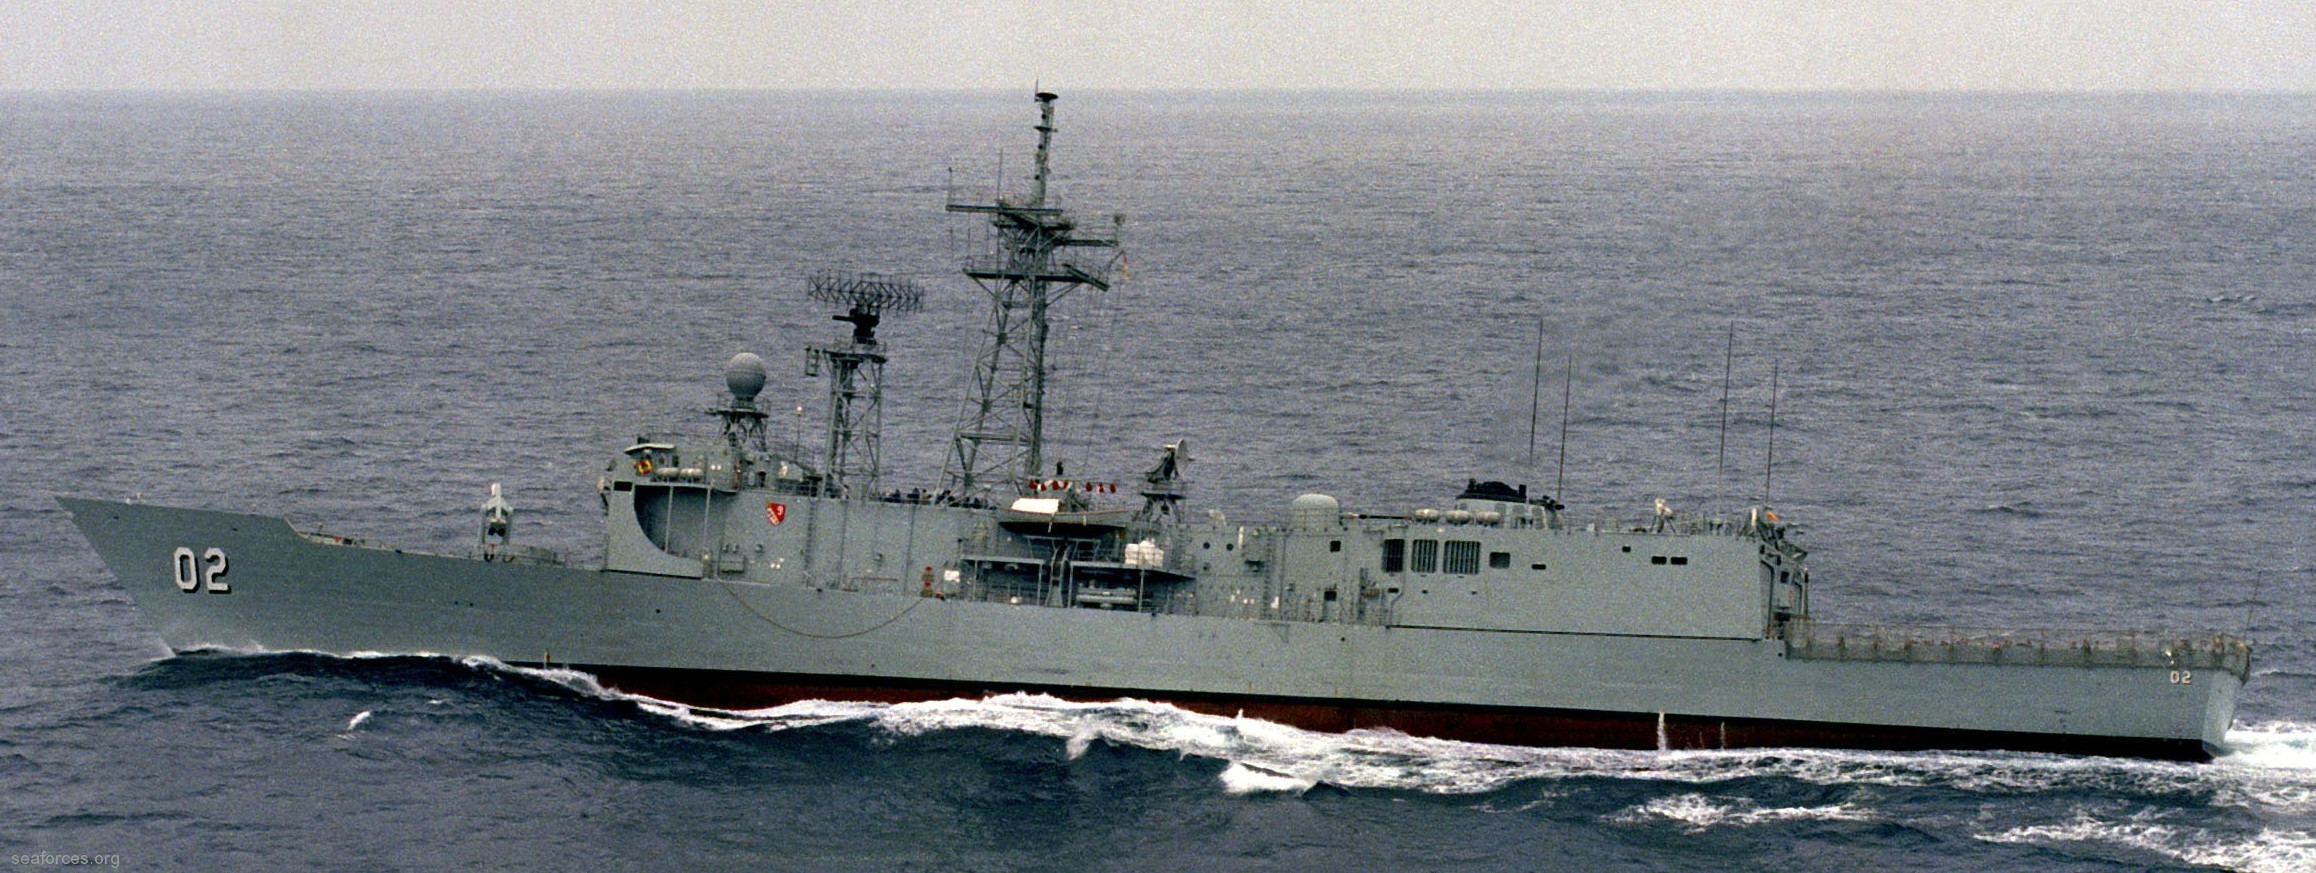 ffg-02 hmas canberra adelaide class frigate royal australian navy 1981 04